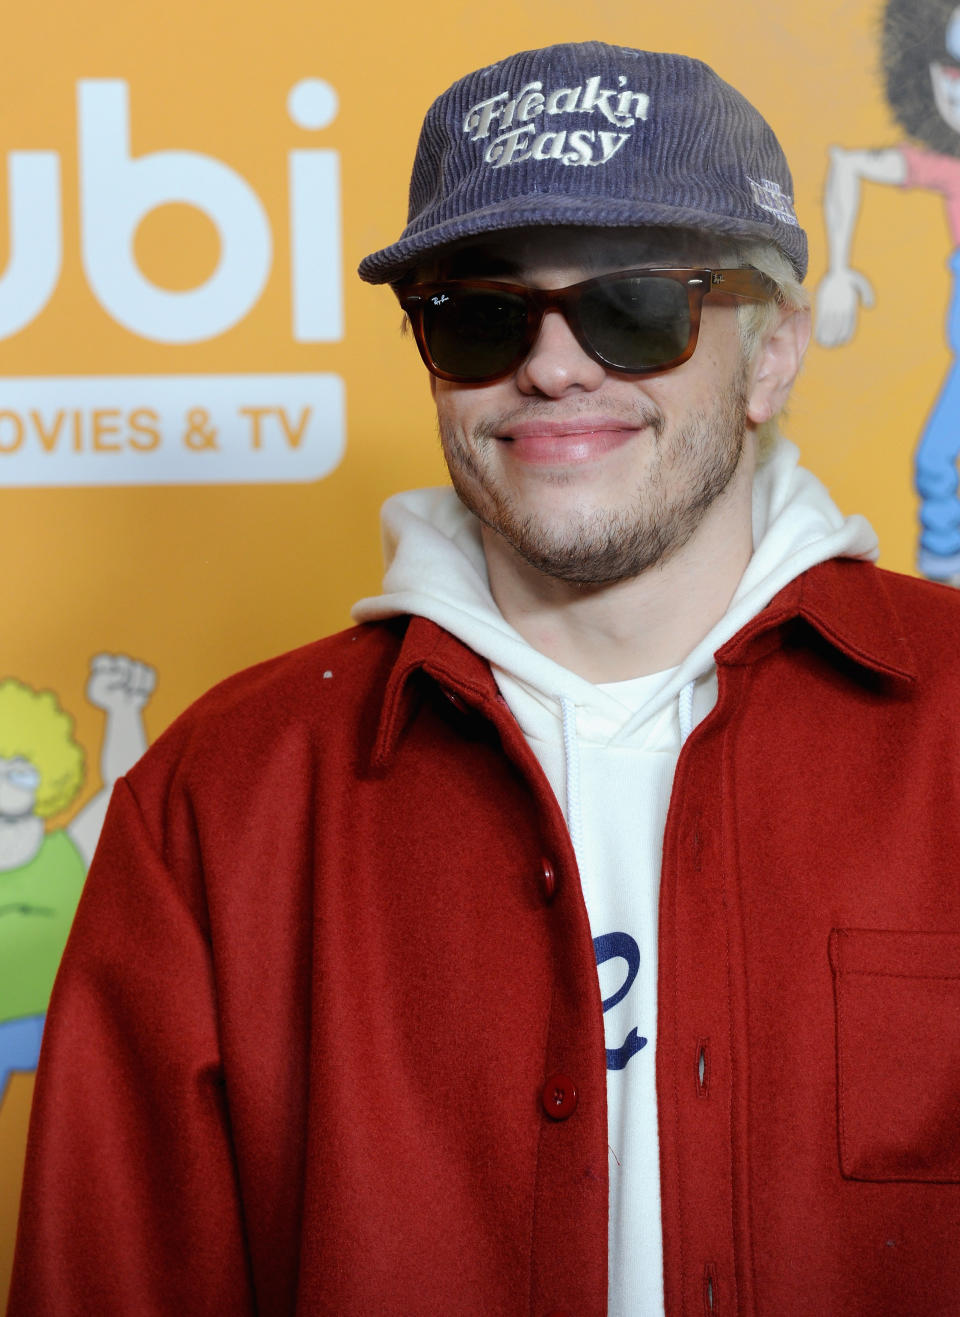 Pete smiling in sunglasses and a "Freak'n Easy" cap